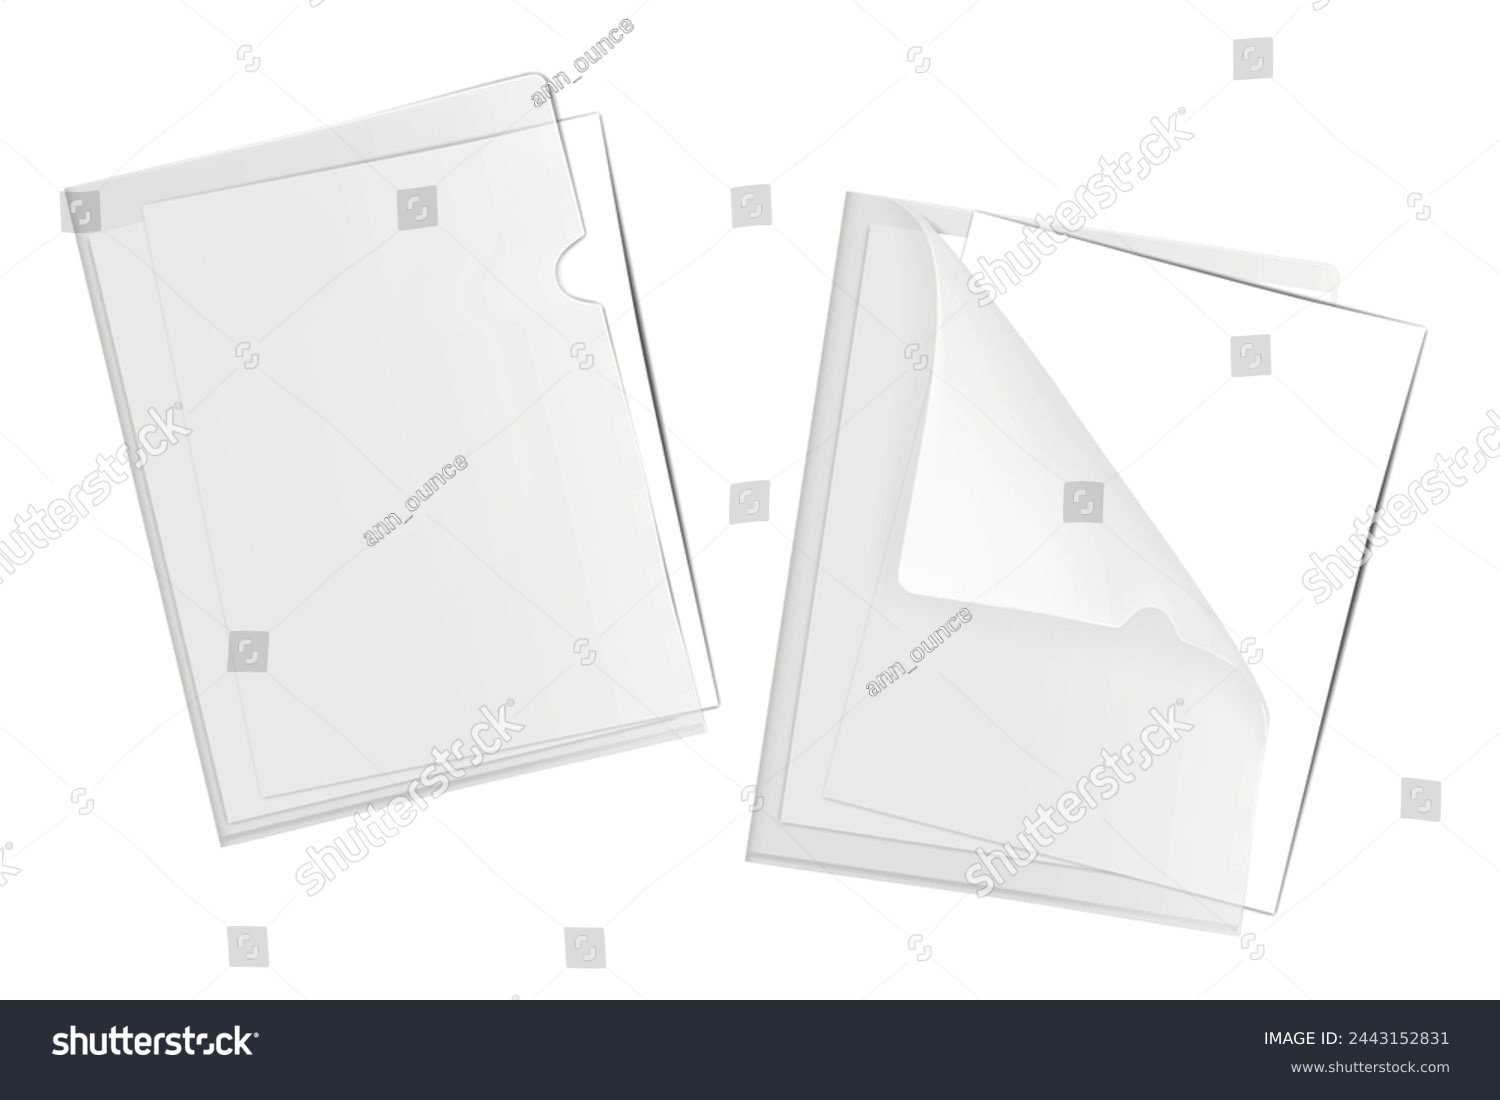 SVG of Clear plastic L-shape file folder with white blank paper sheets inside. Realistic mockup. PVC corner document sleeve holder cover. Vector mock-up svg